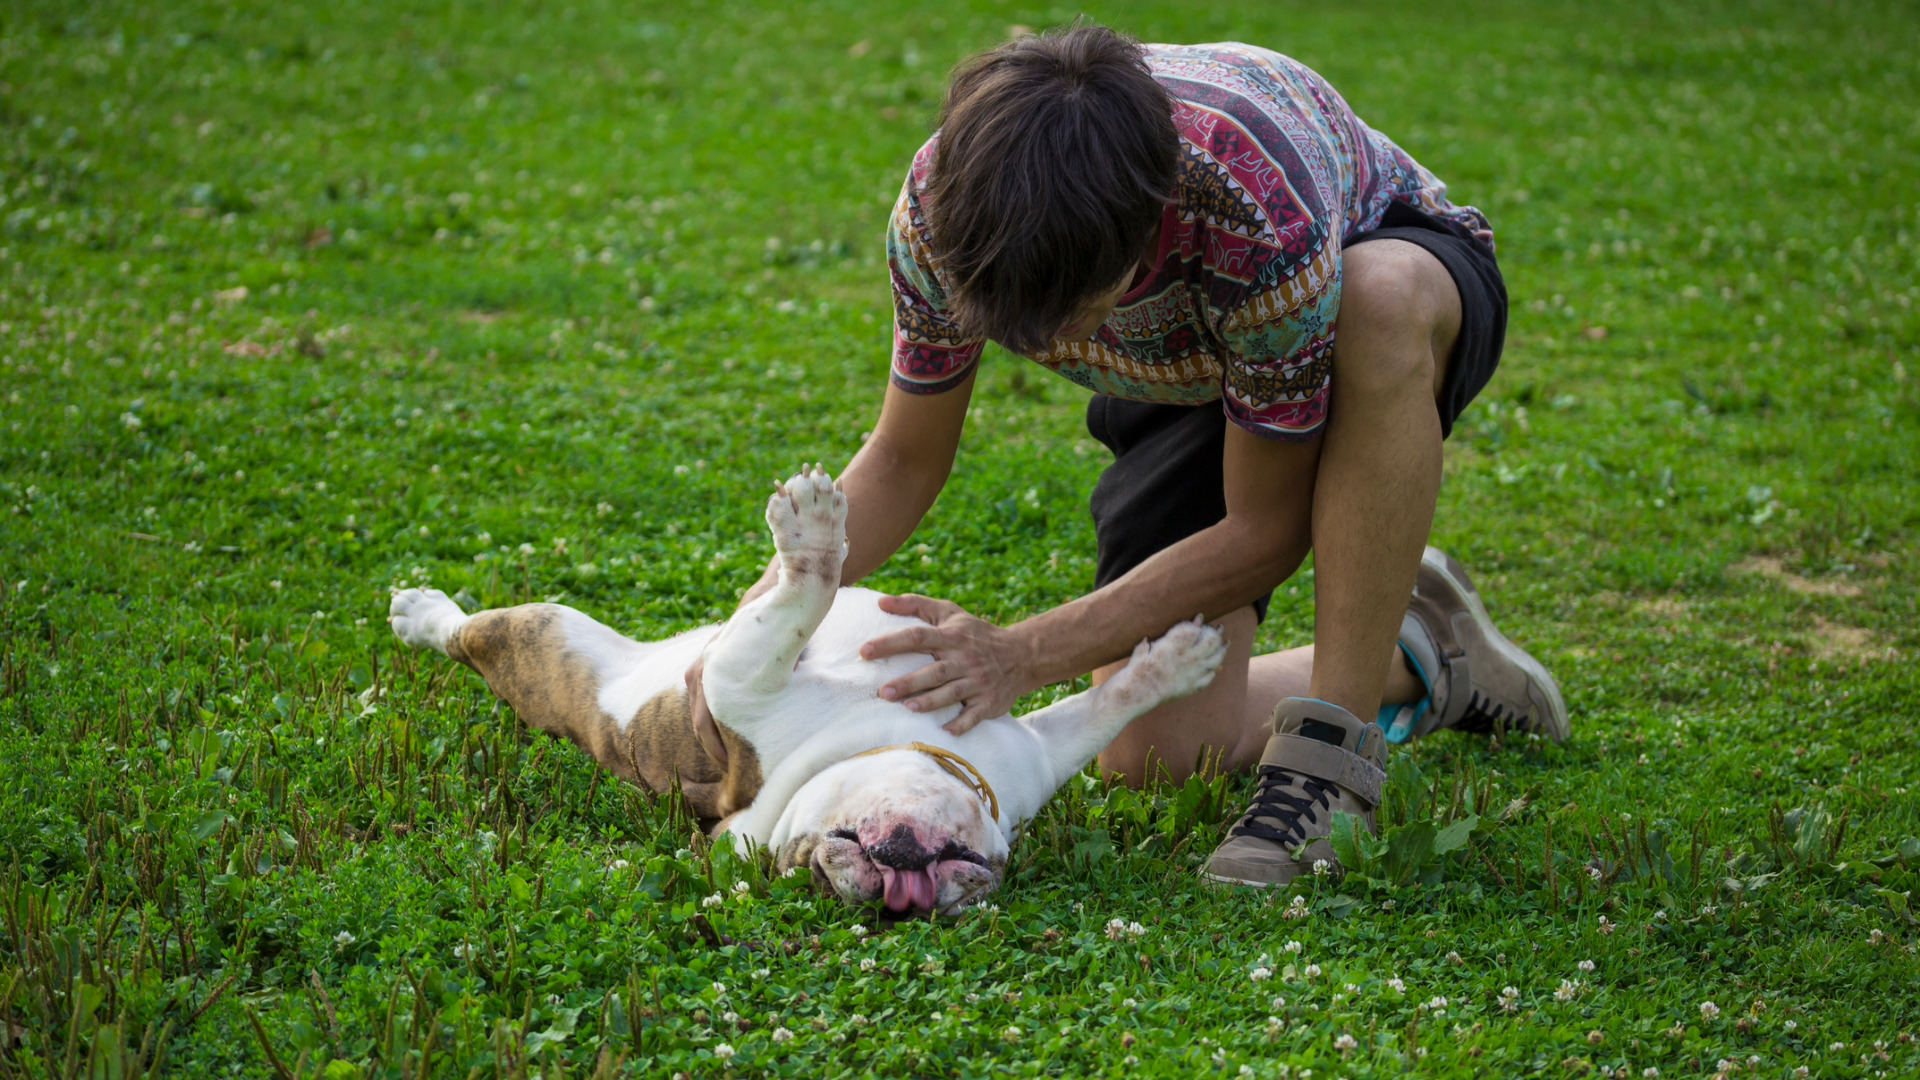 man rubbing dog's belly in a grassy field.